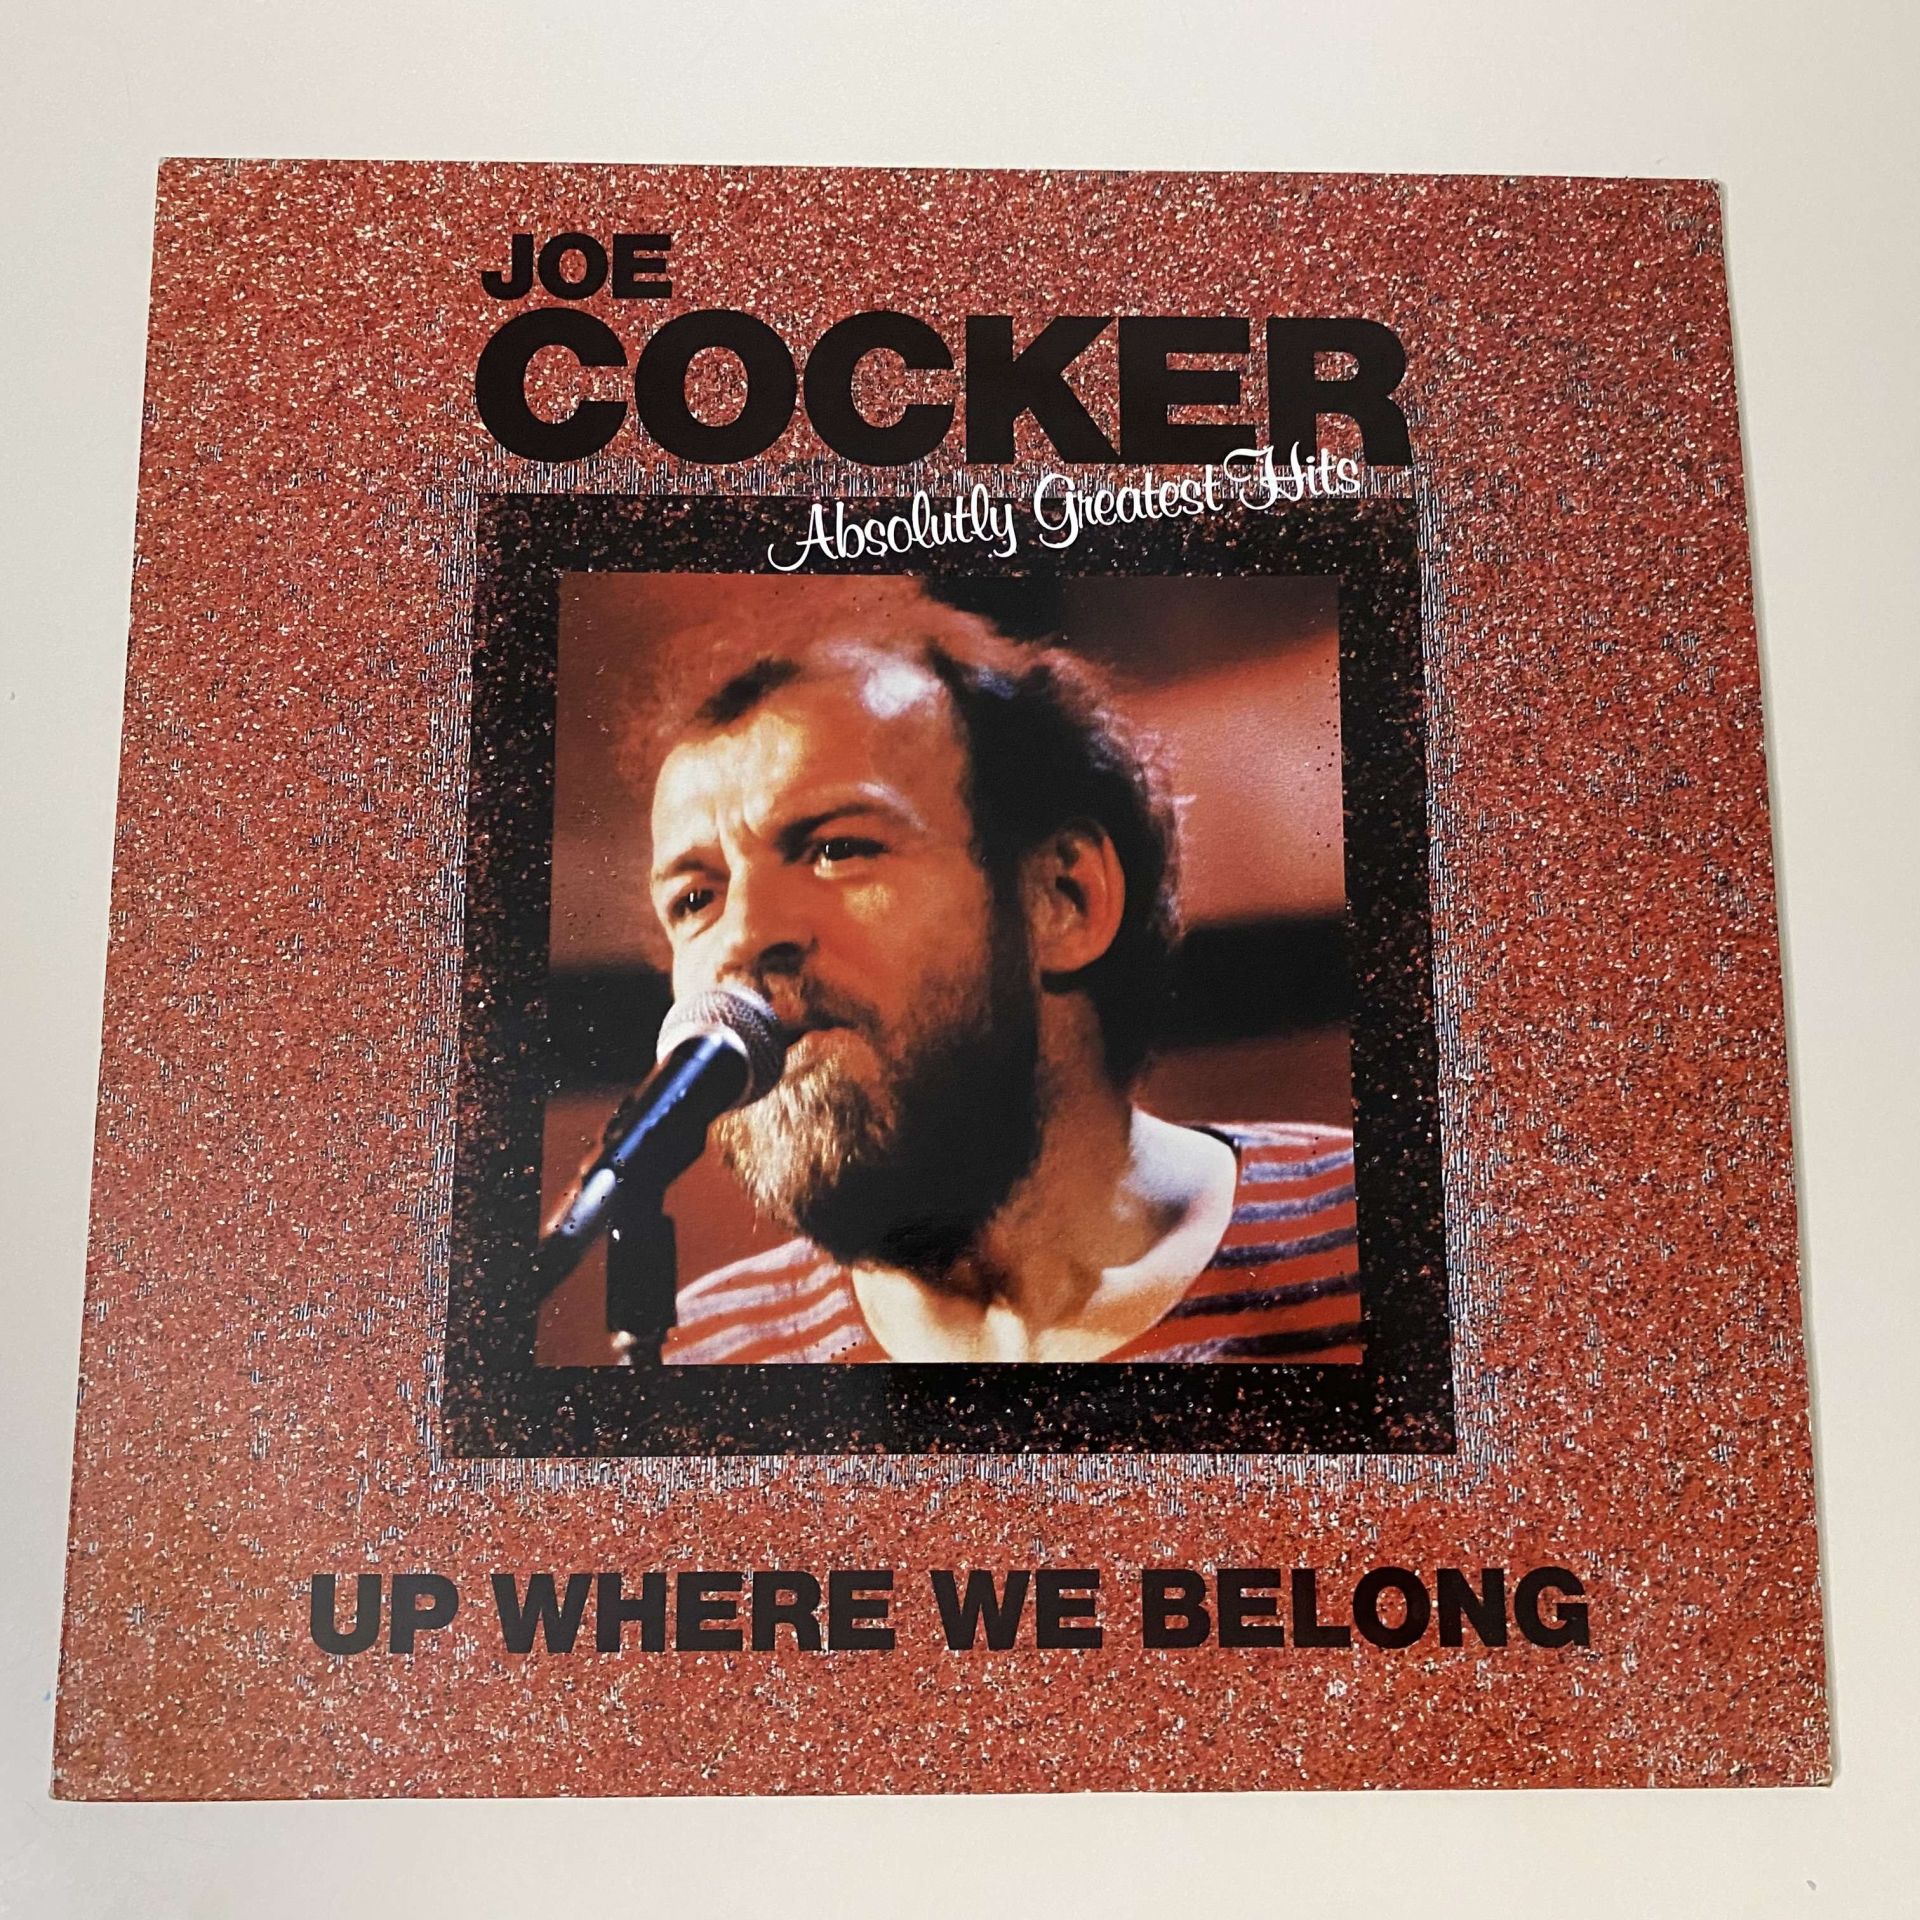 Joe Cocker – Up Where We Belong (Absolutely Greatest Hits)